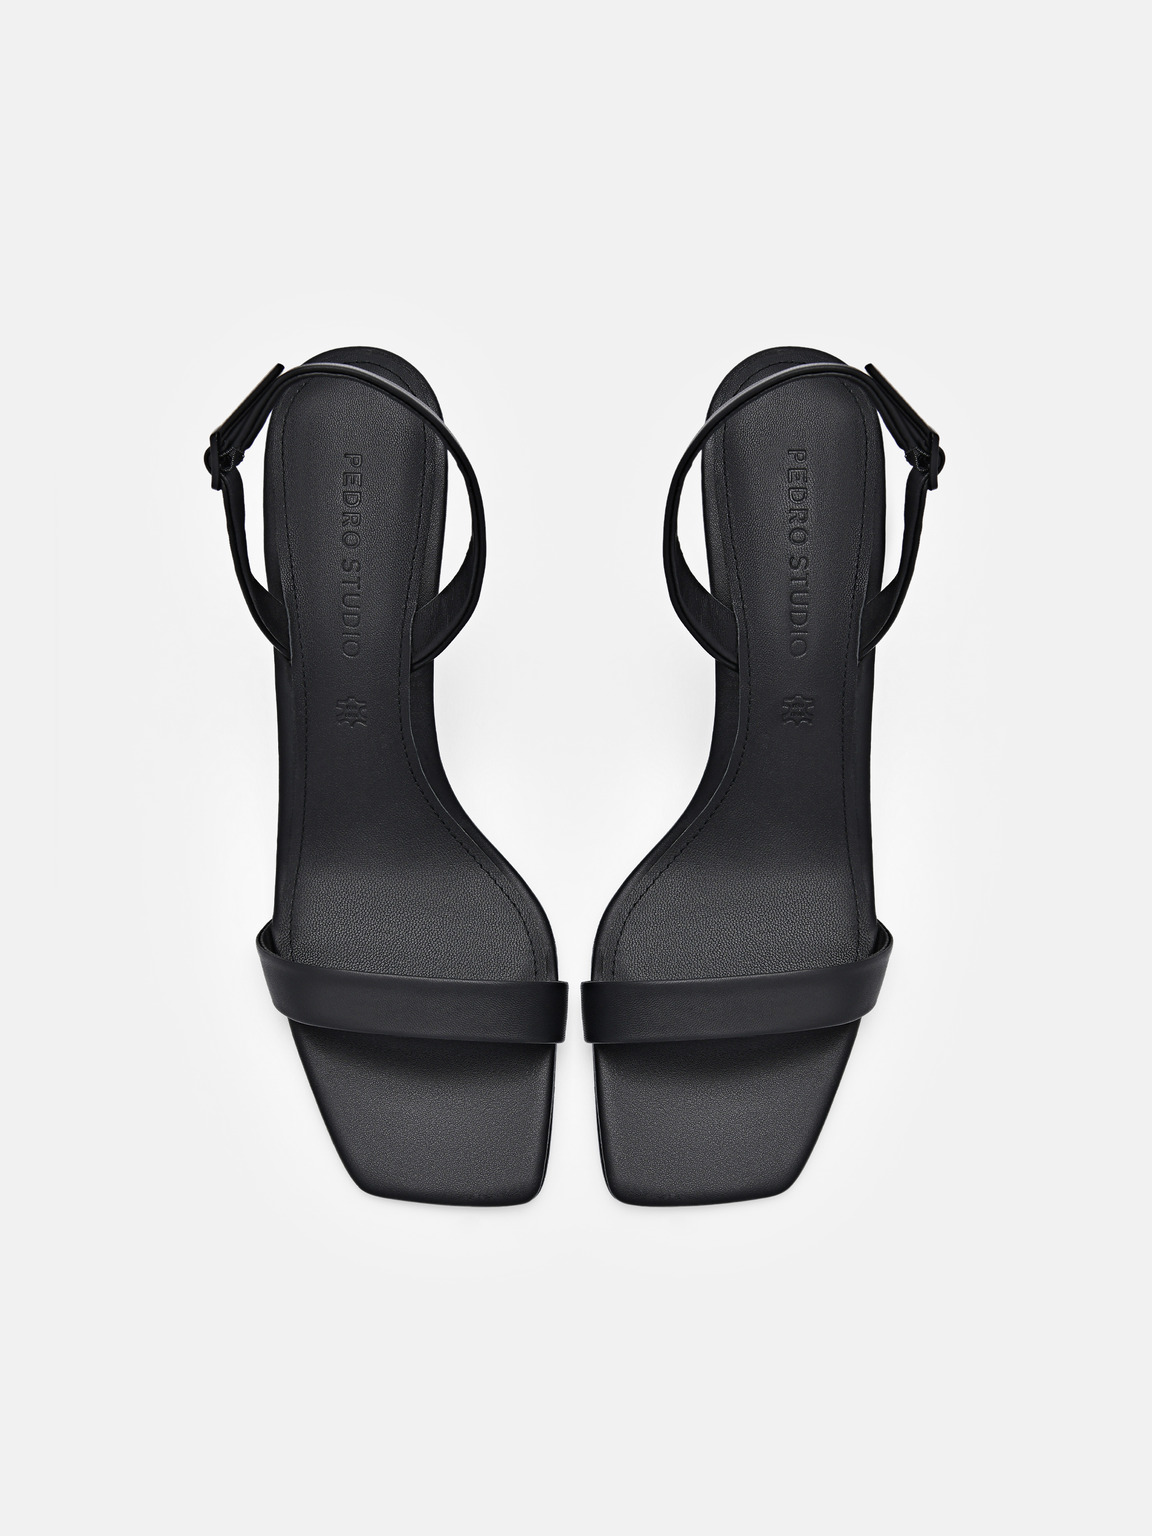 PEDRO工作室Mel皮革高跟涼鞋, 黑色